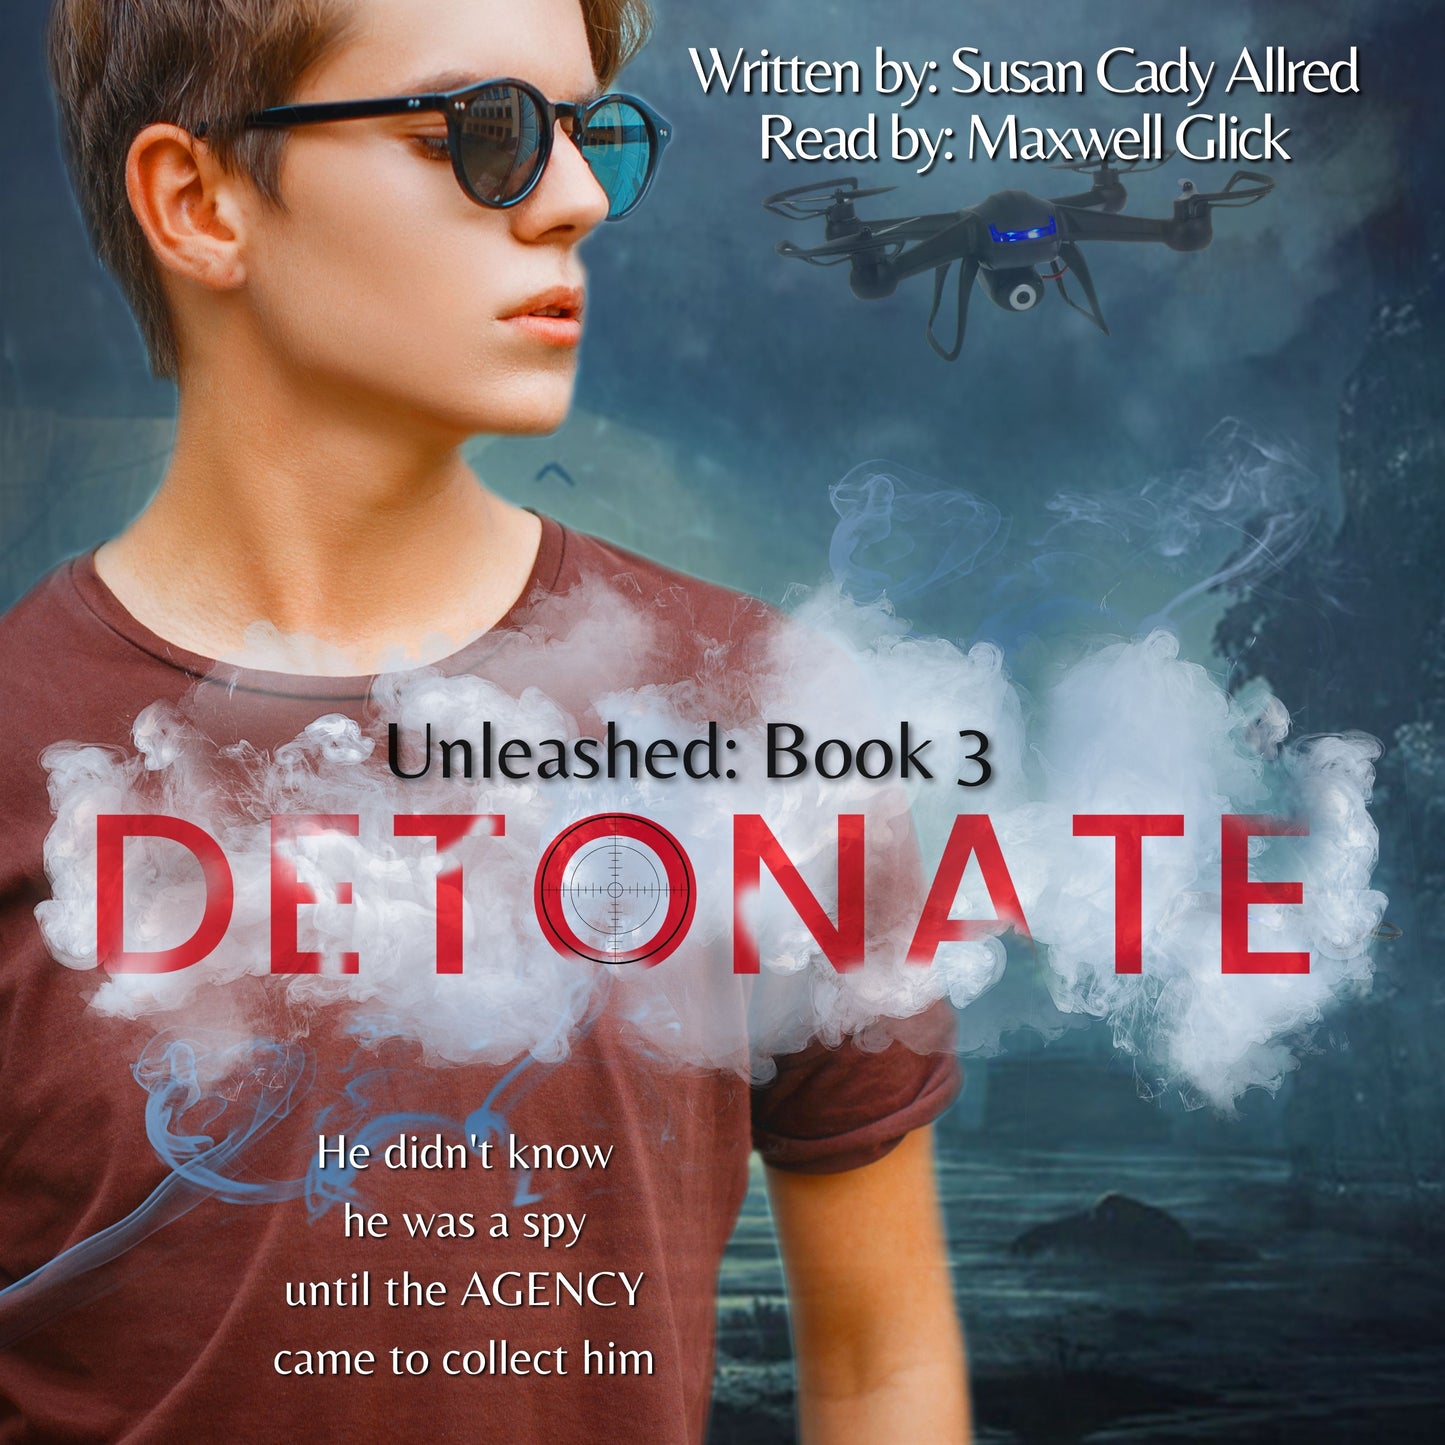 DetoNATE: A YA Teen Spy Thriller (Unleashed Book 3)